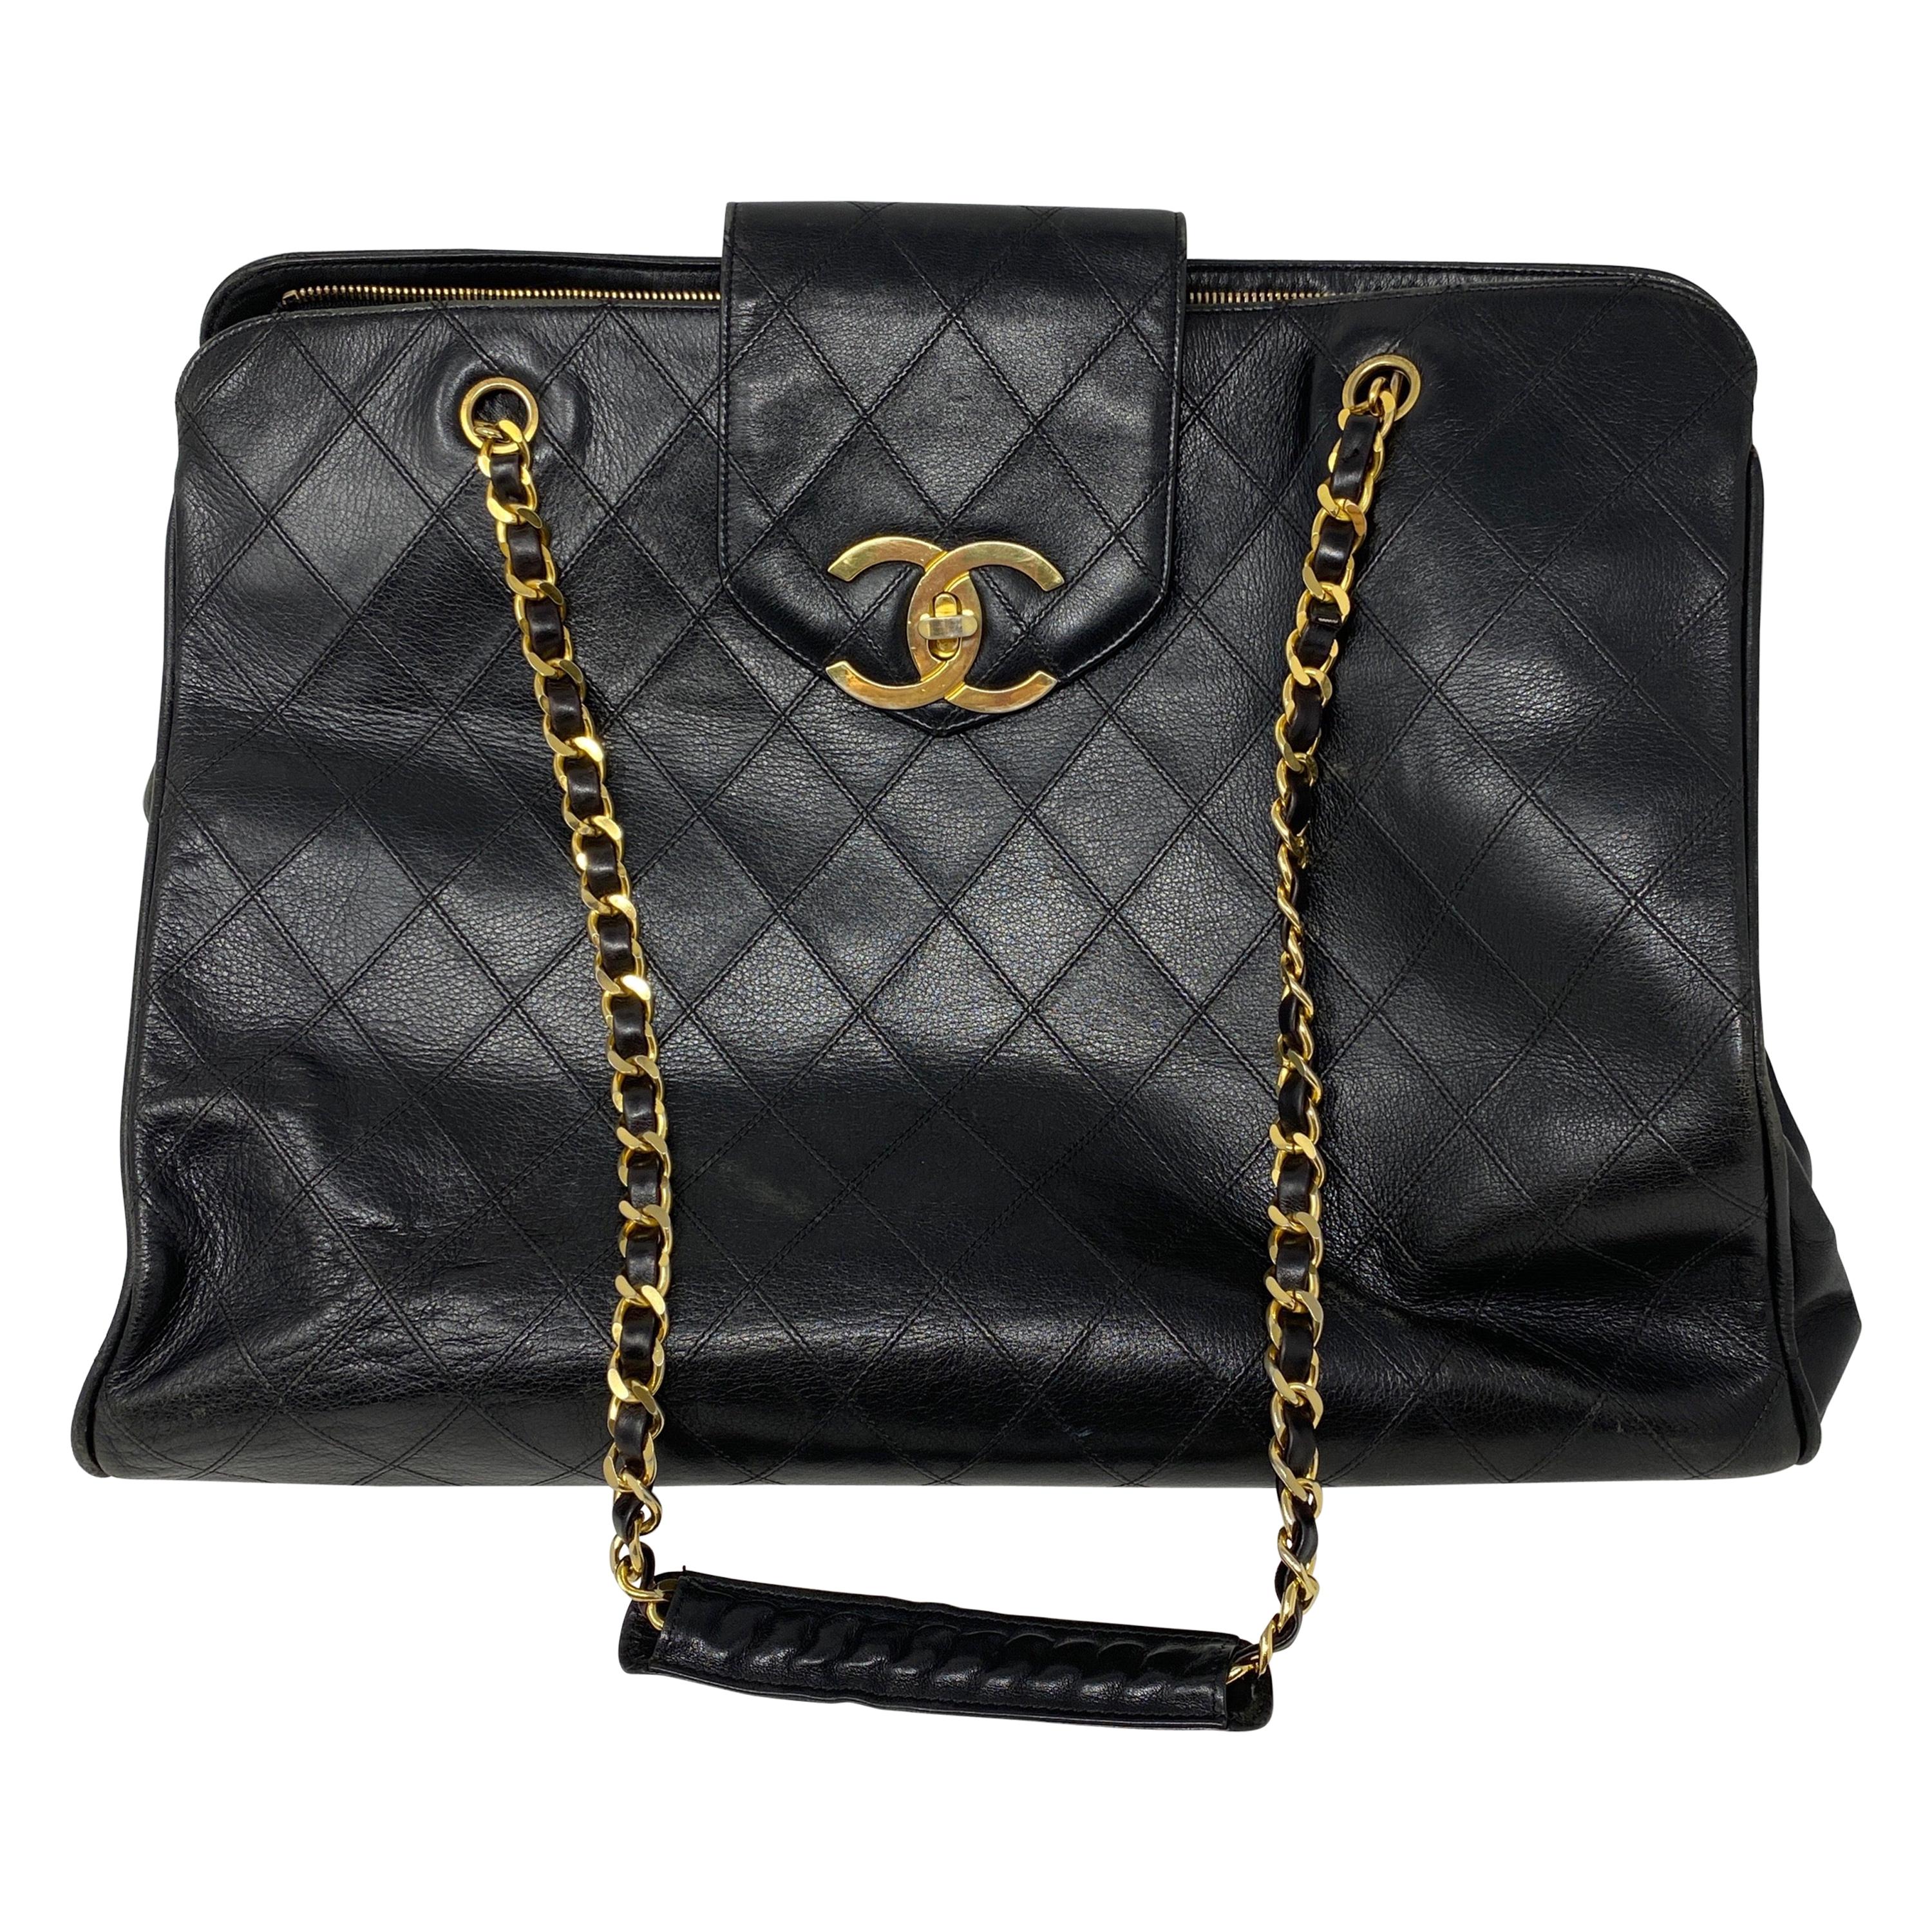 Chanel Super Model Tote Bag